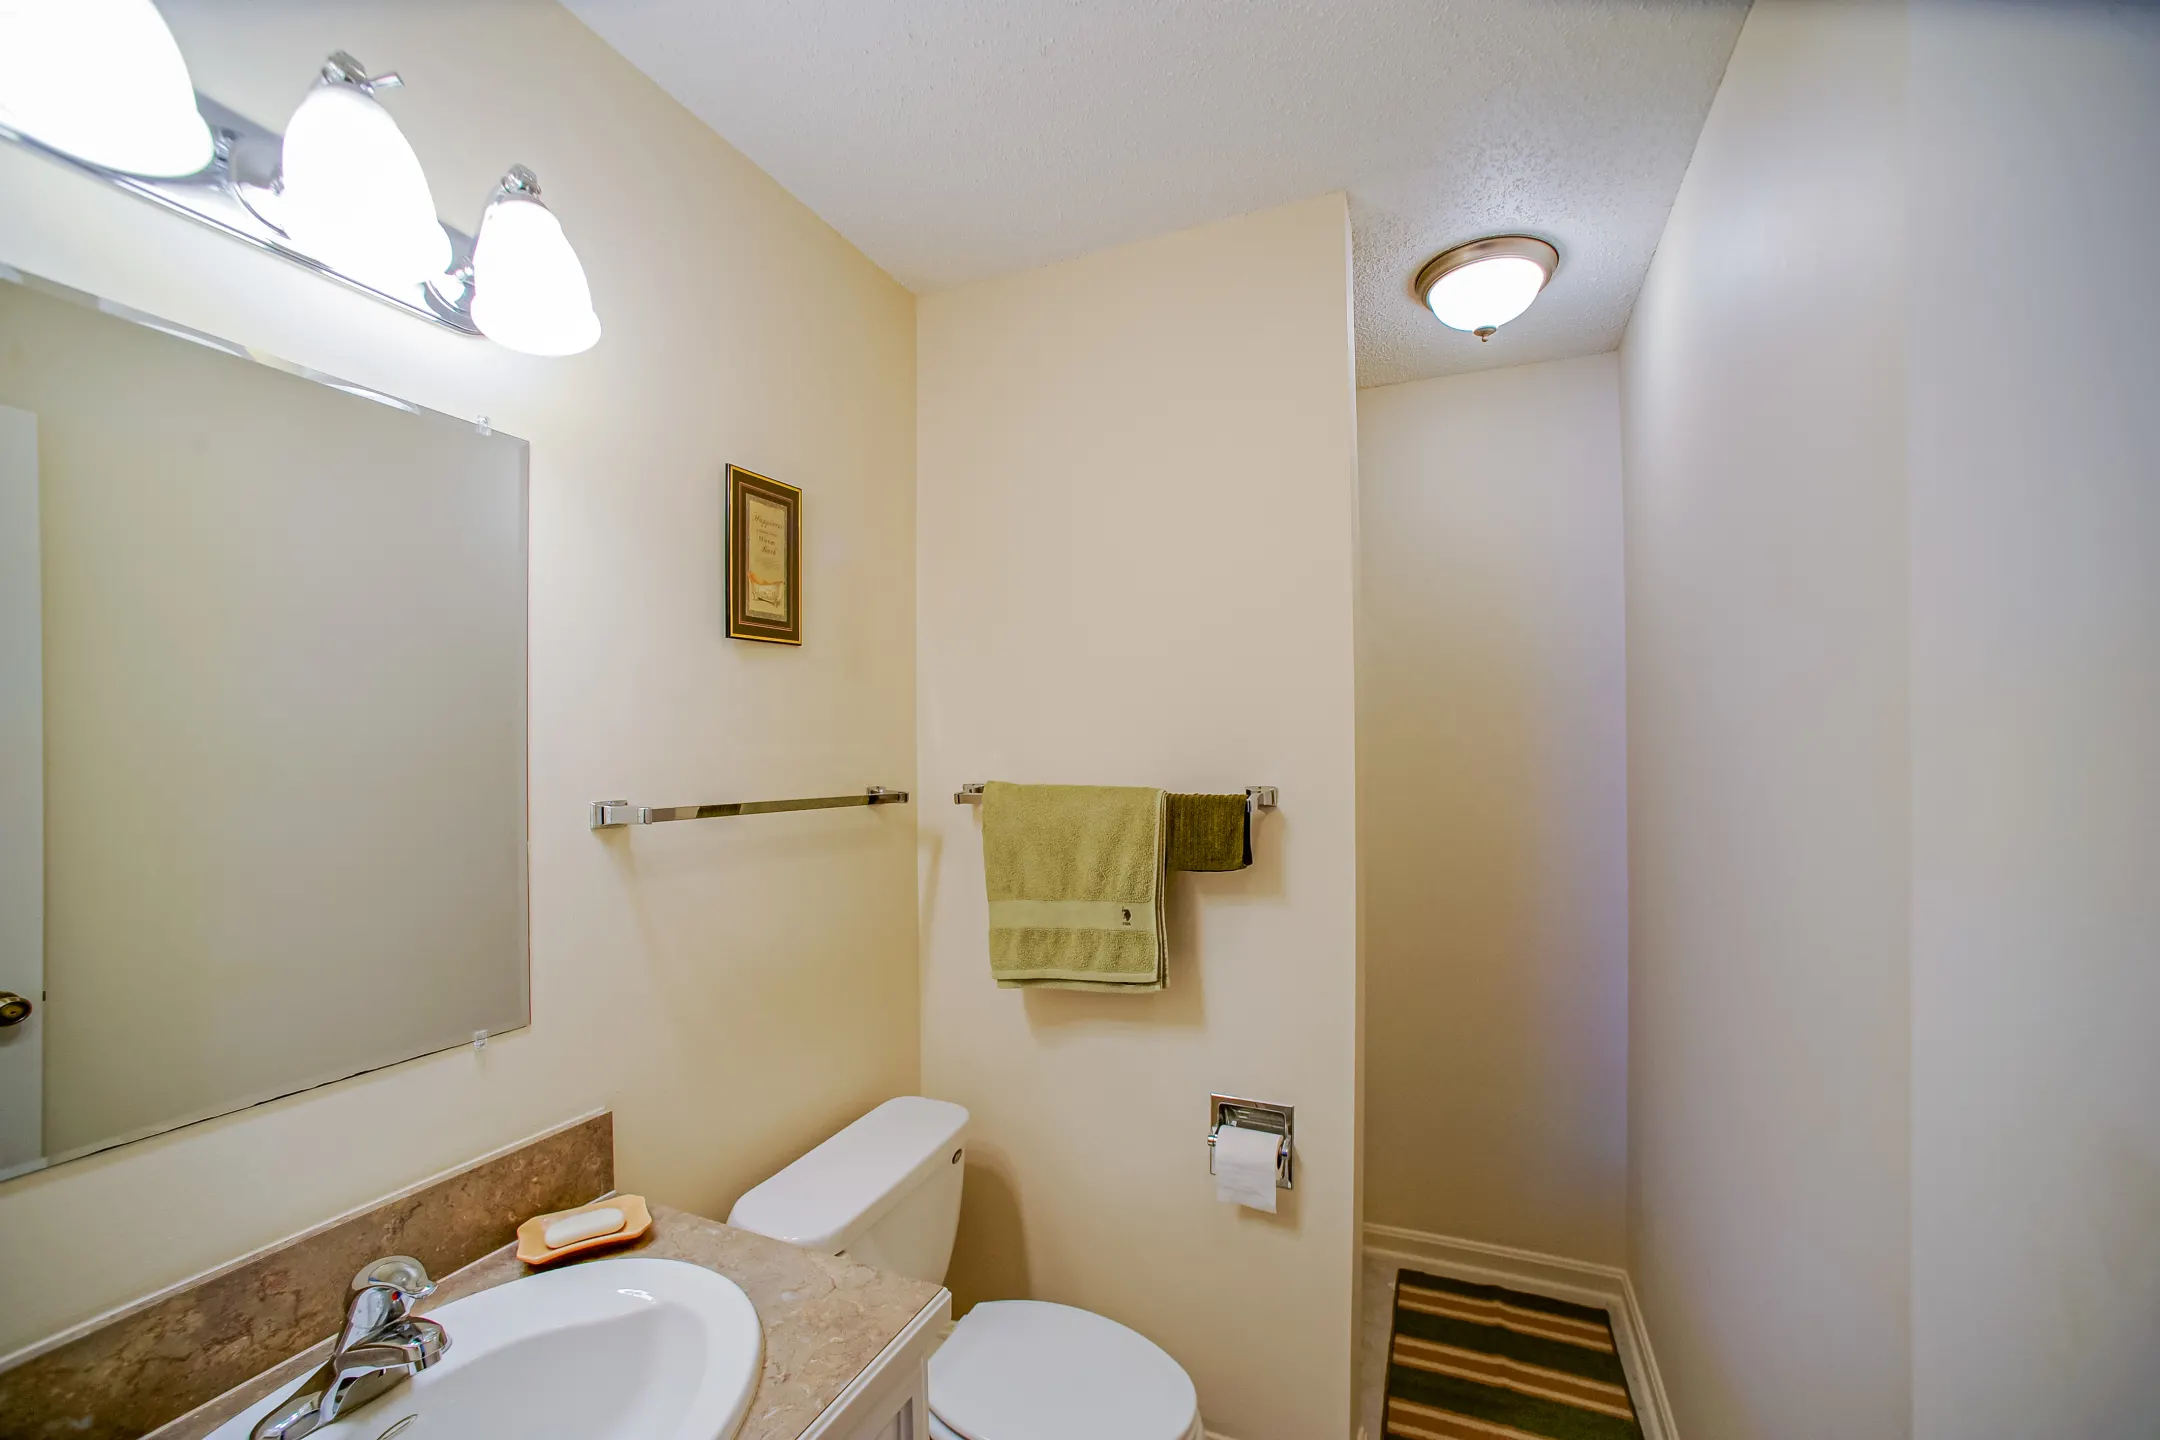 Bathroom - Bryce De Moray - Evansville, IN